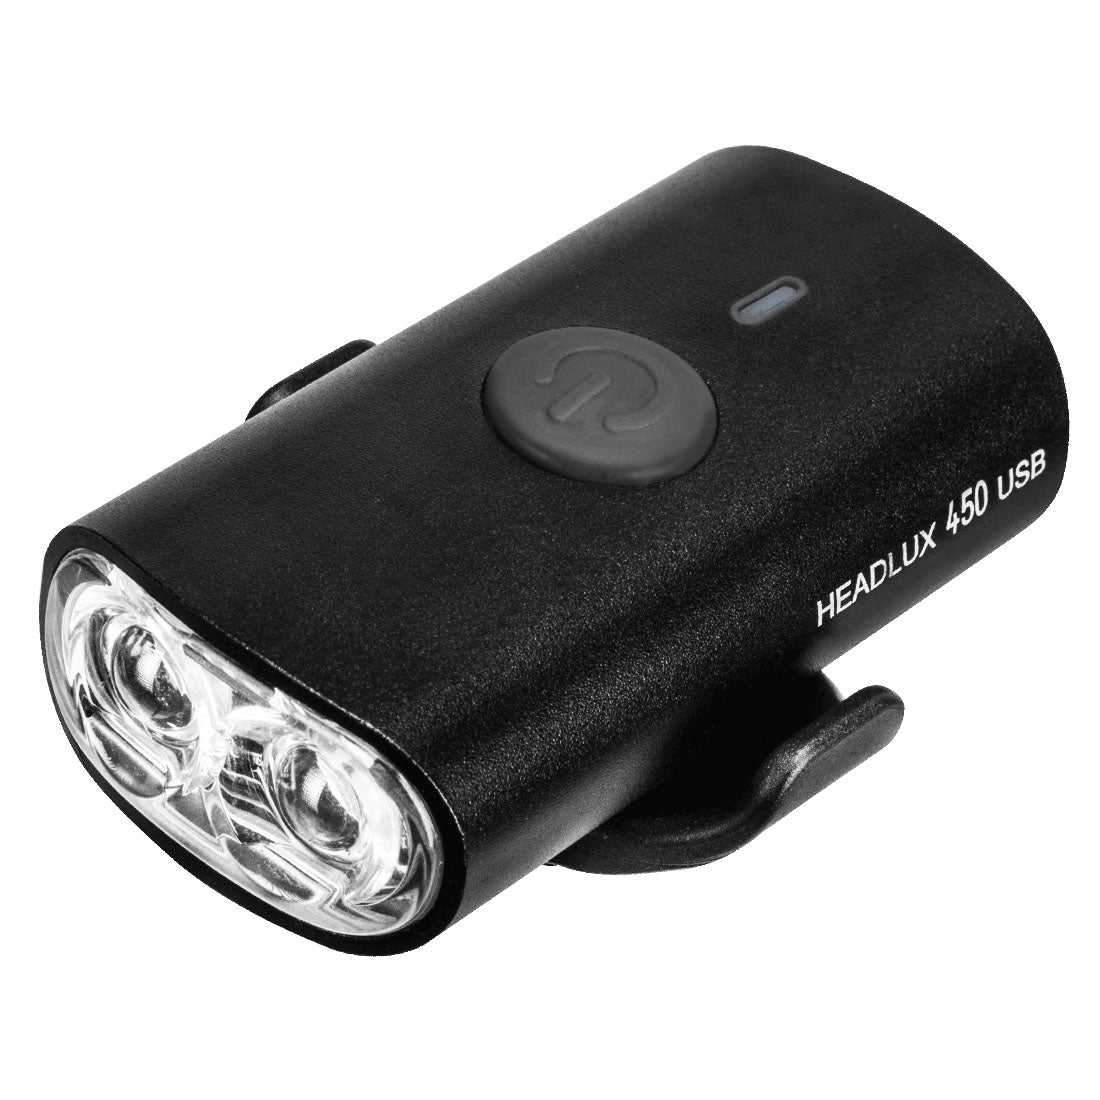 Image of Topeak Headlux USB Front Bike Light